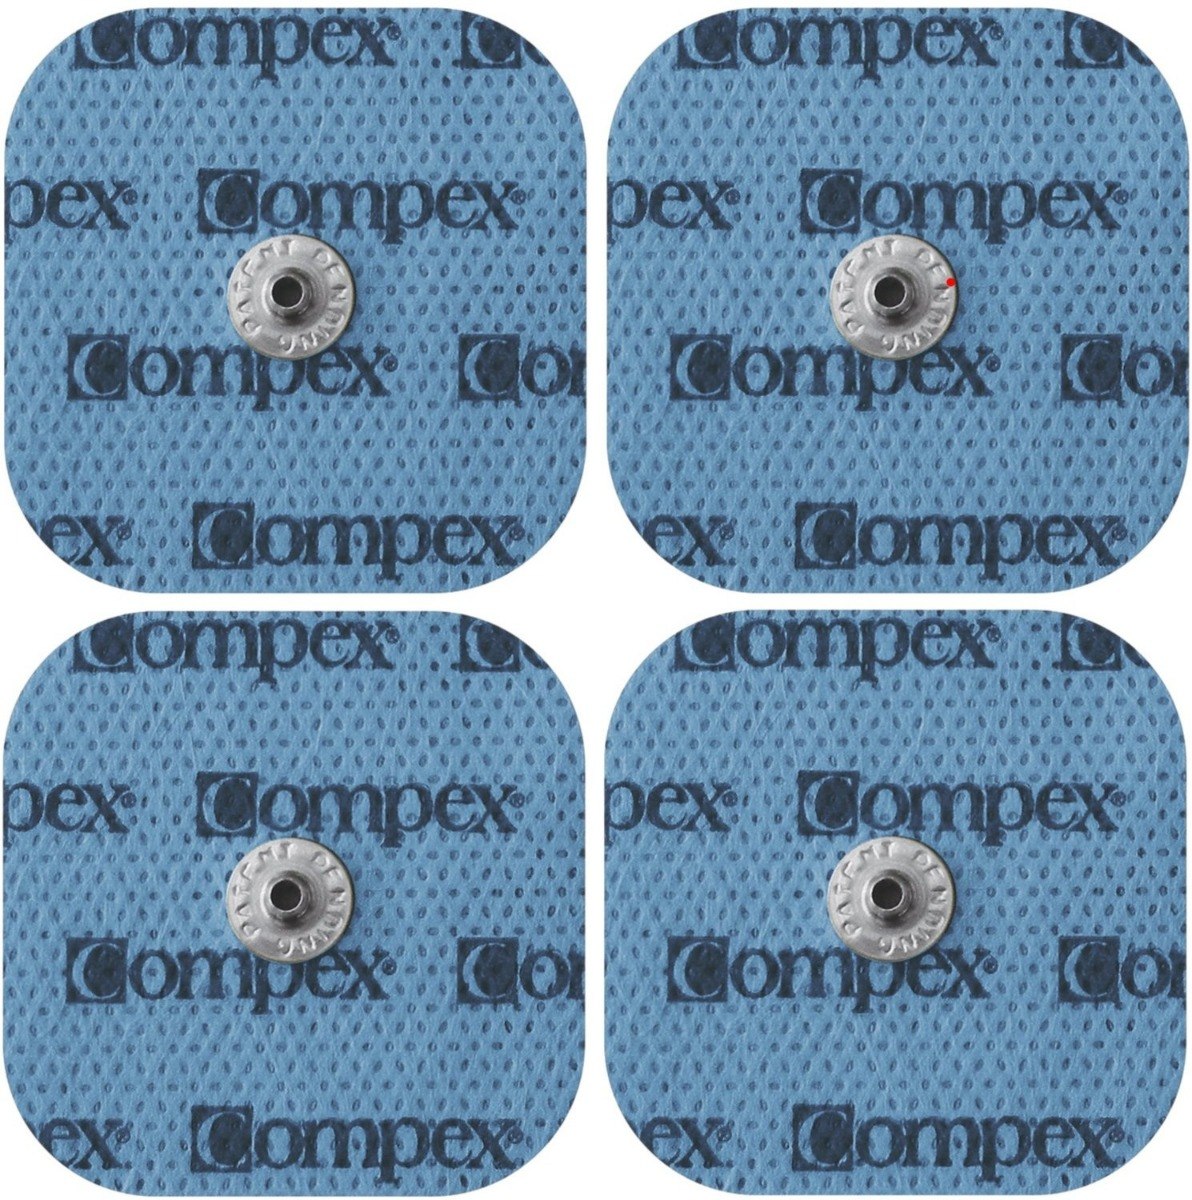 Electrodos para electroestimulador COMPEX FIL PERFORMANCE 5x5 cm (x4)